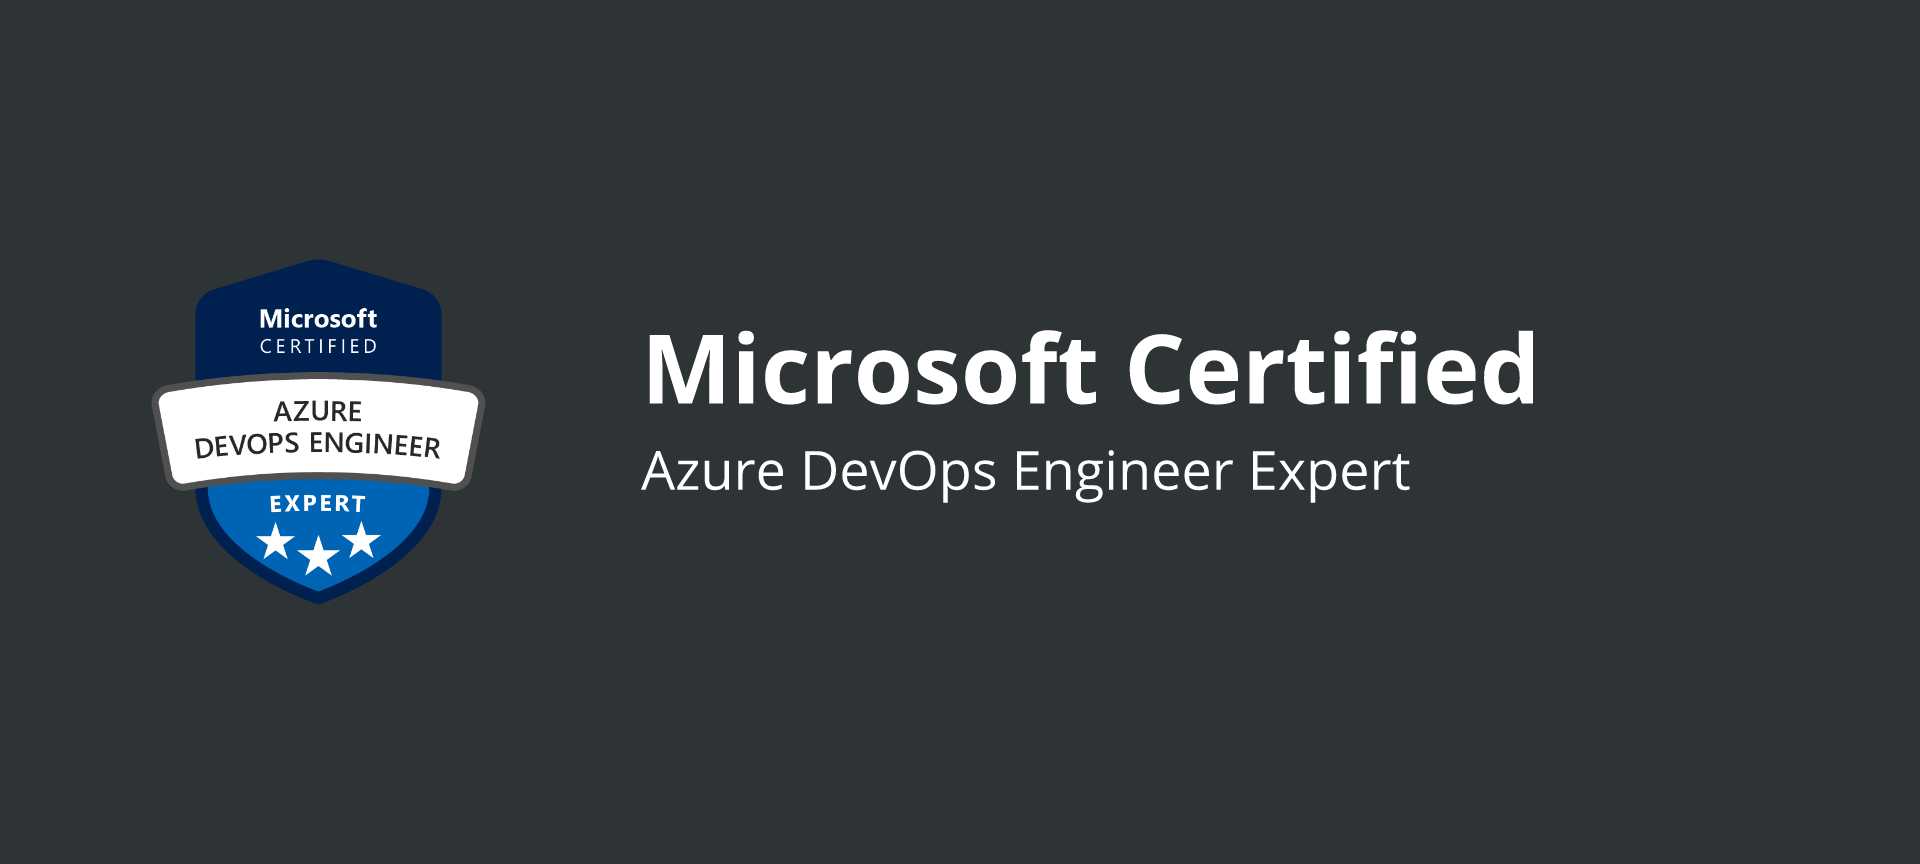 Microsoft Azure DevOps Solutions / AZ-400 course and certification